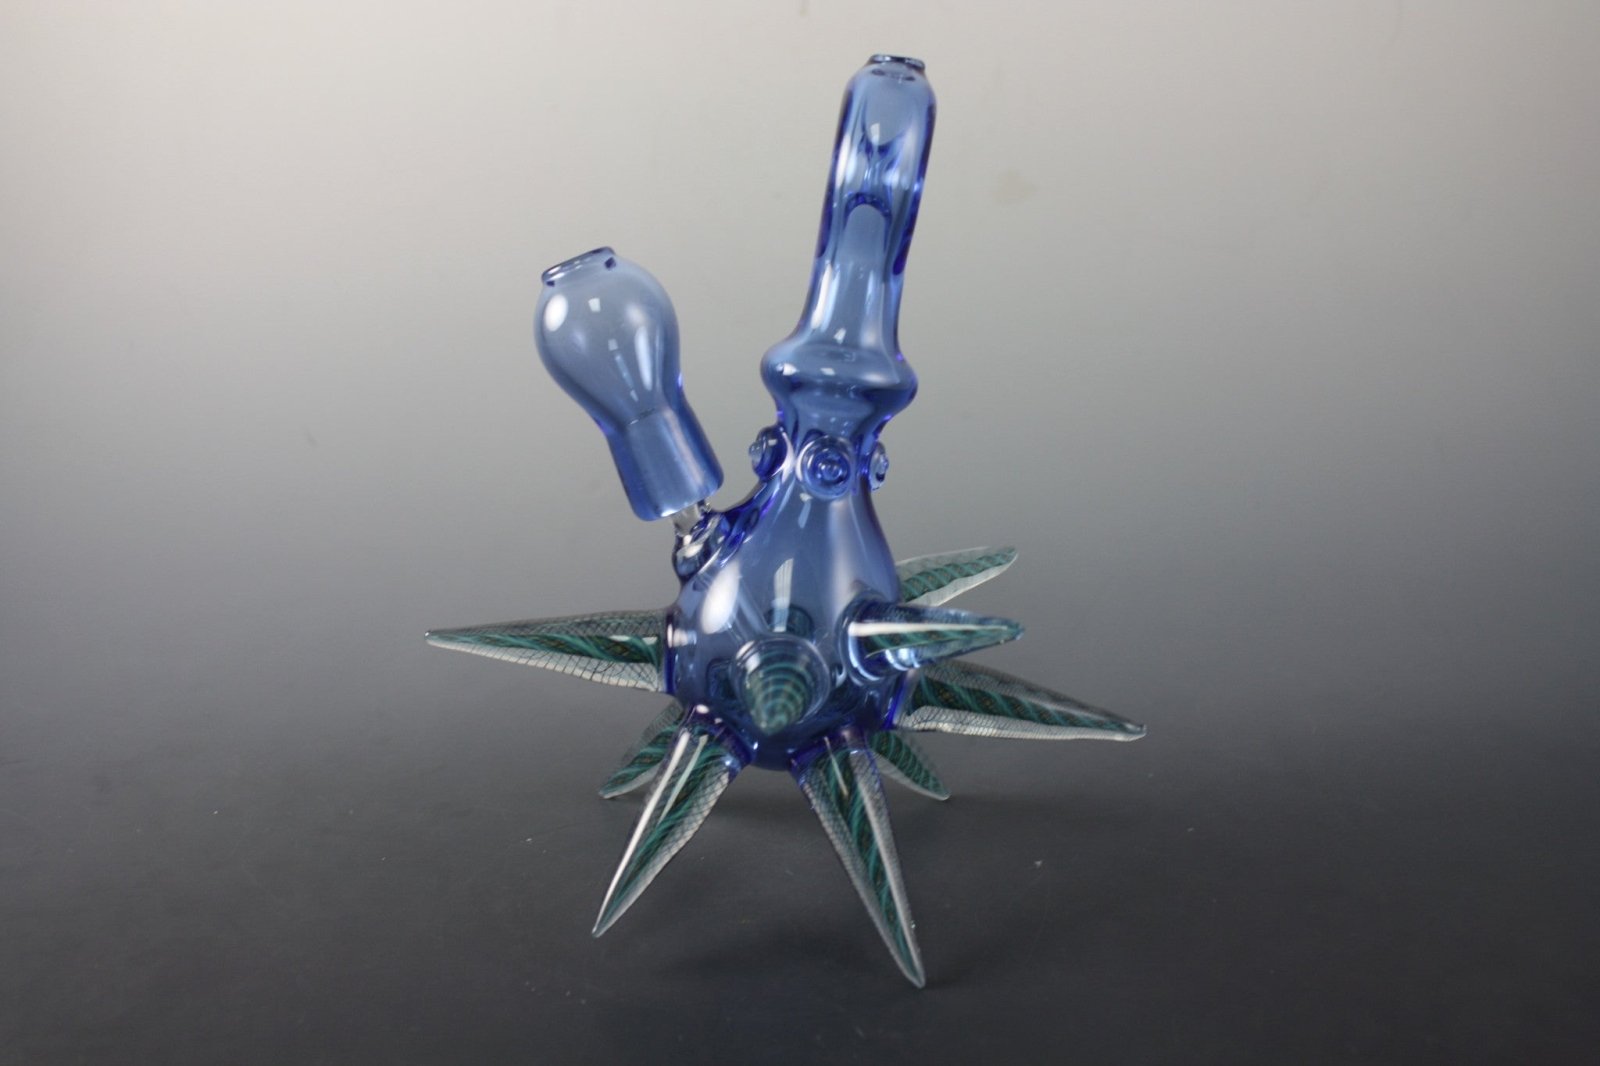 Chad Goodpastor/Ben Birney vapor rig - Headdy Glass